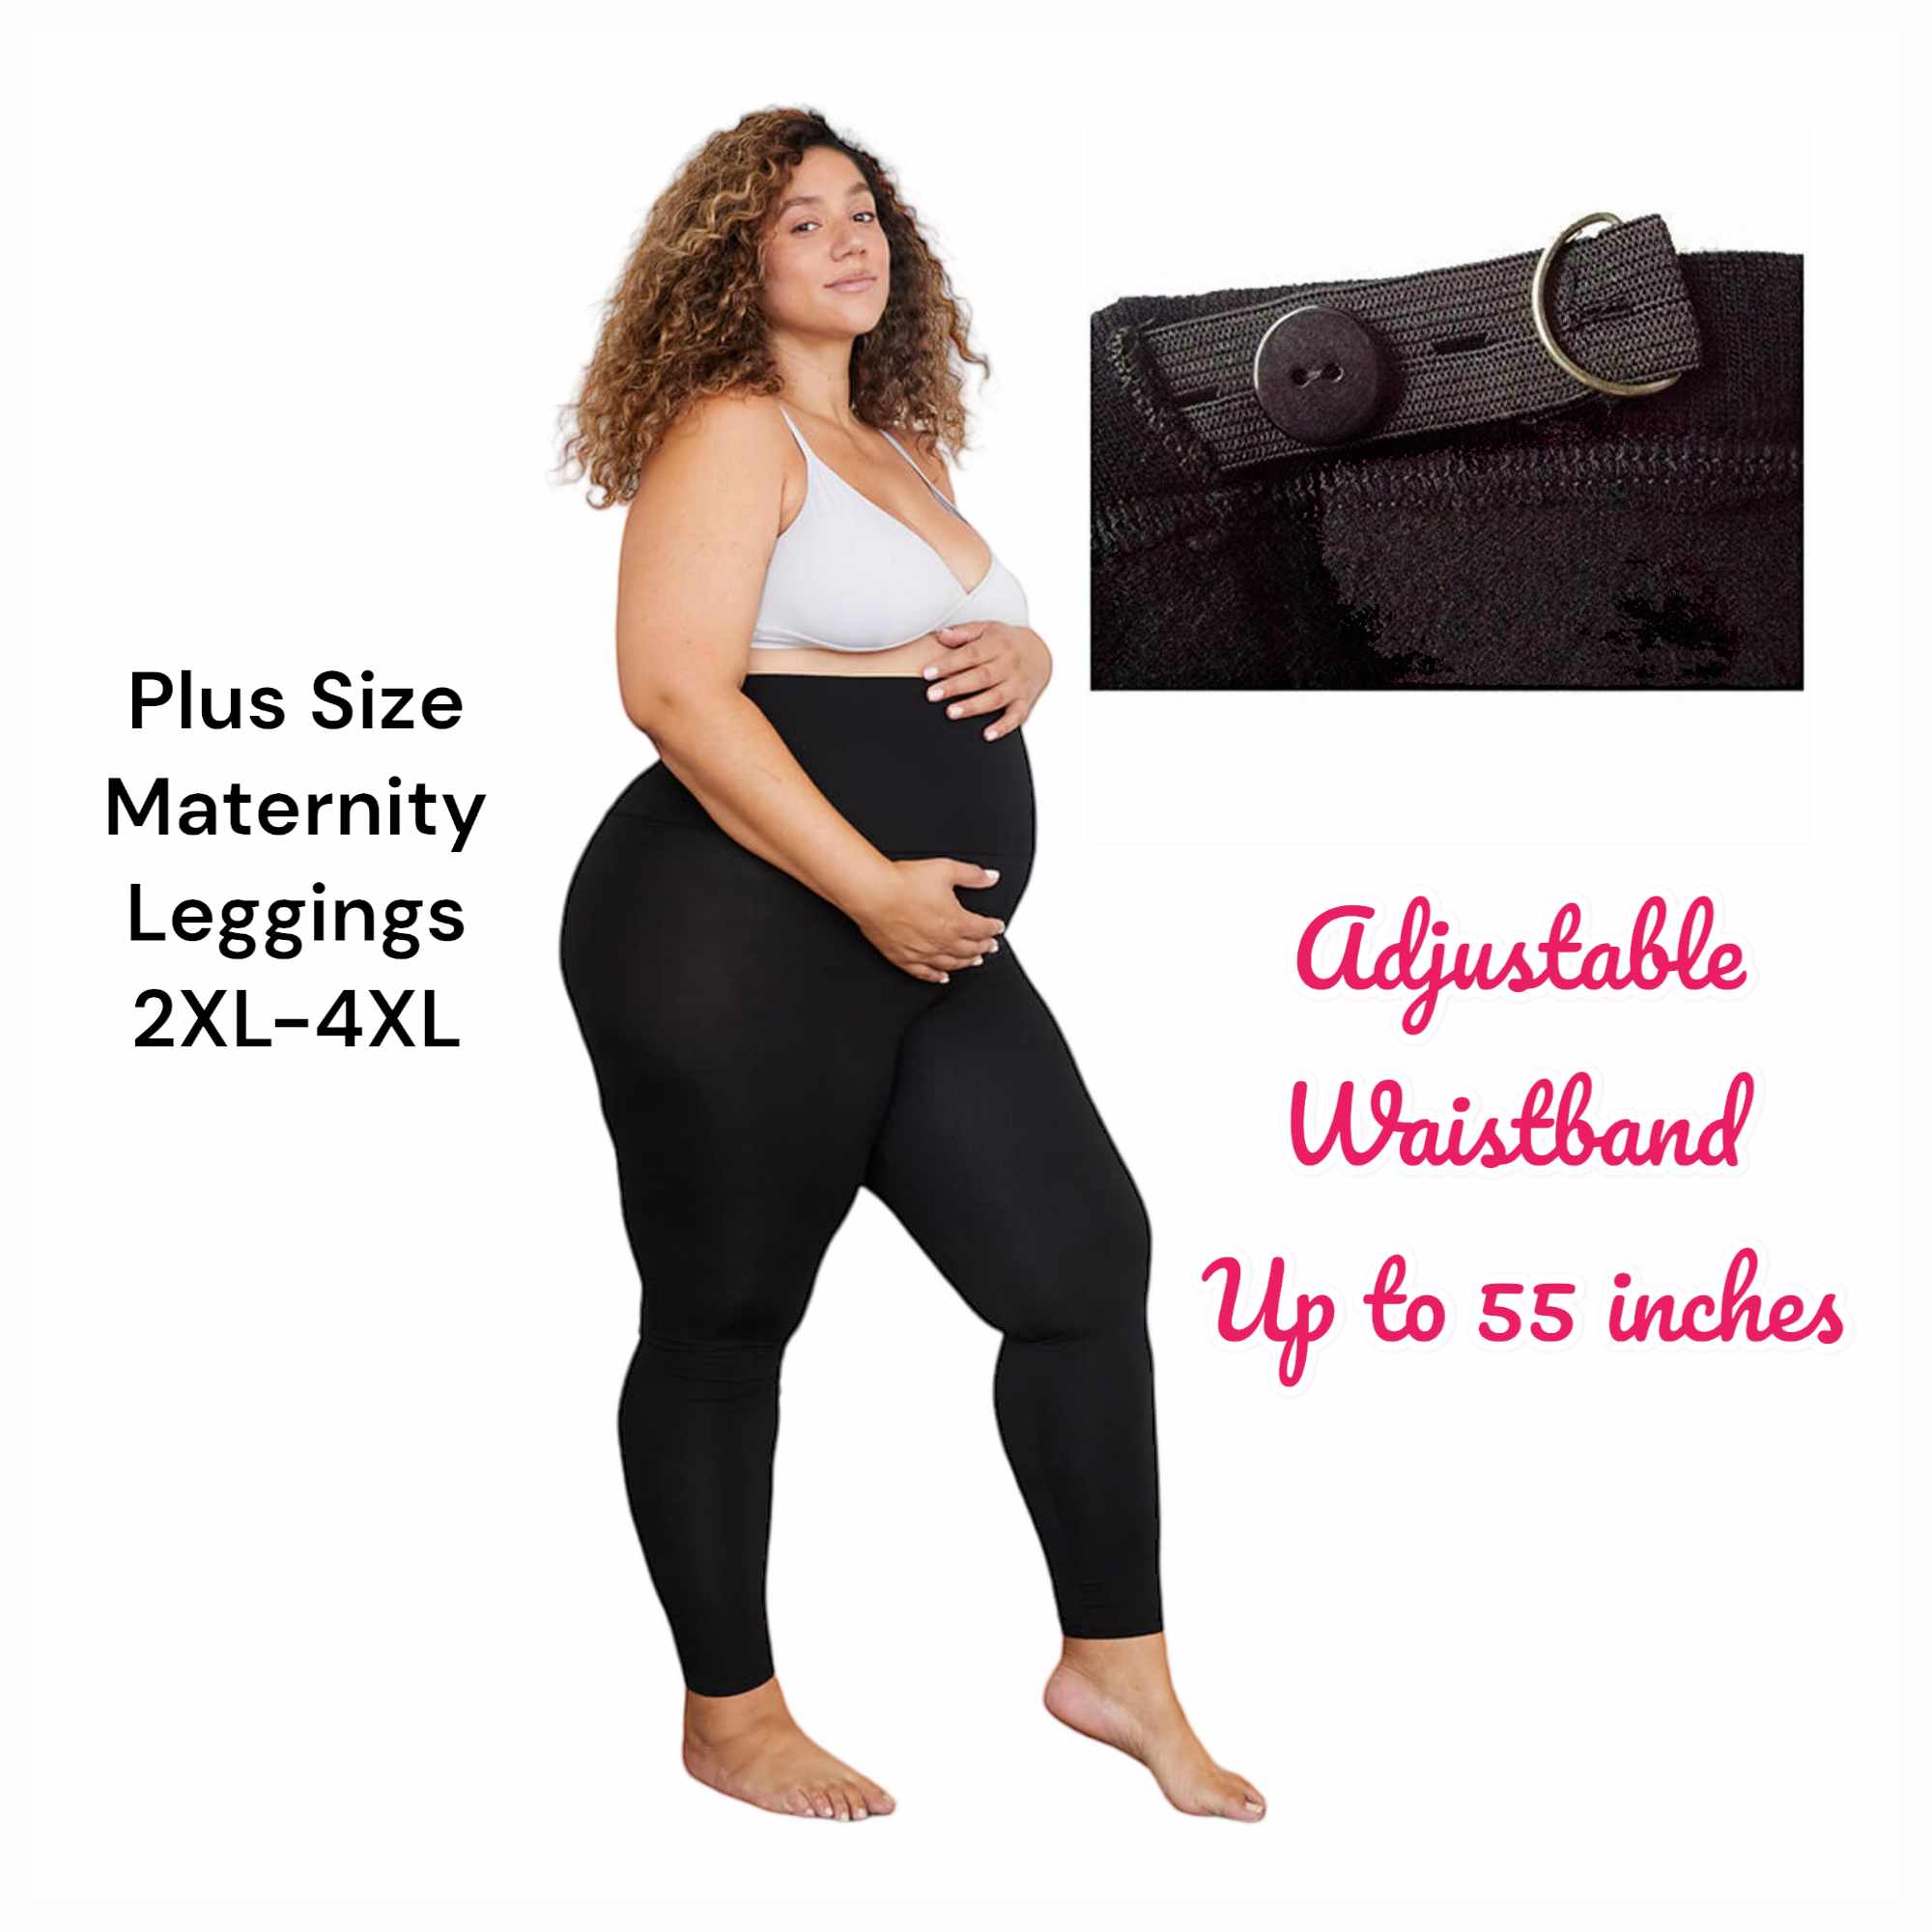 Plus Size Maternity Leggings Adjustable & Stretchable Garter Waist